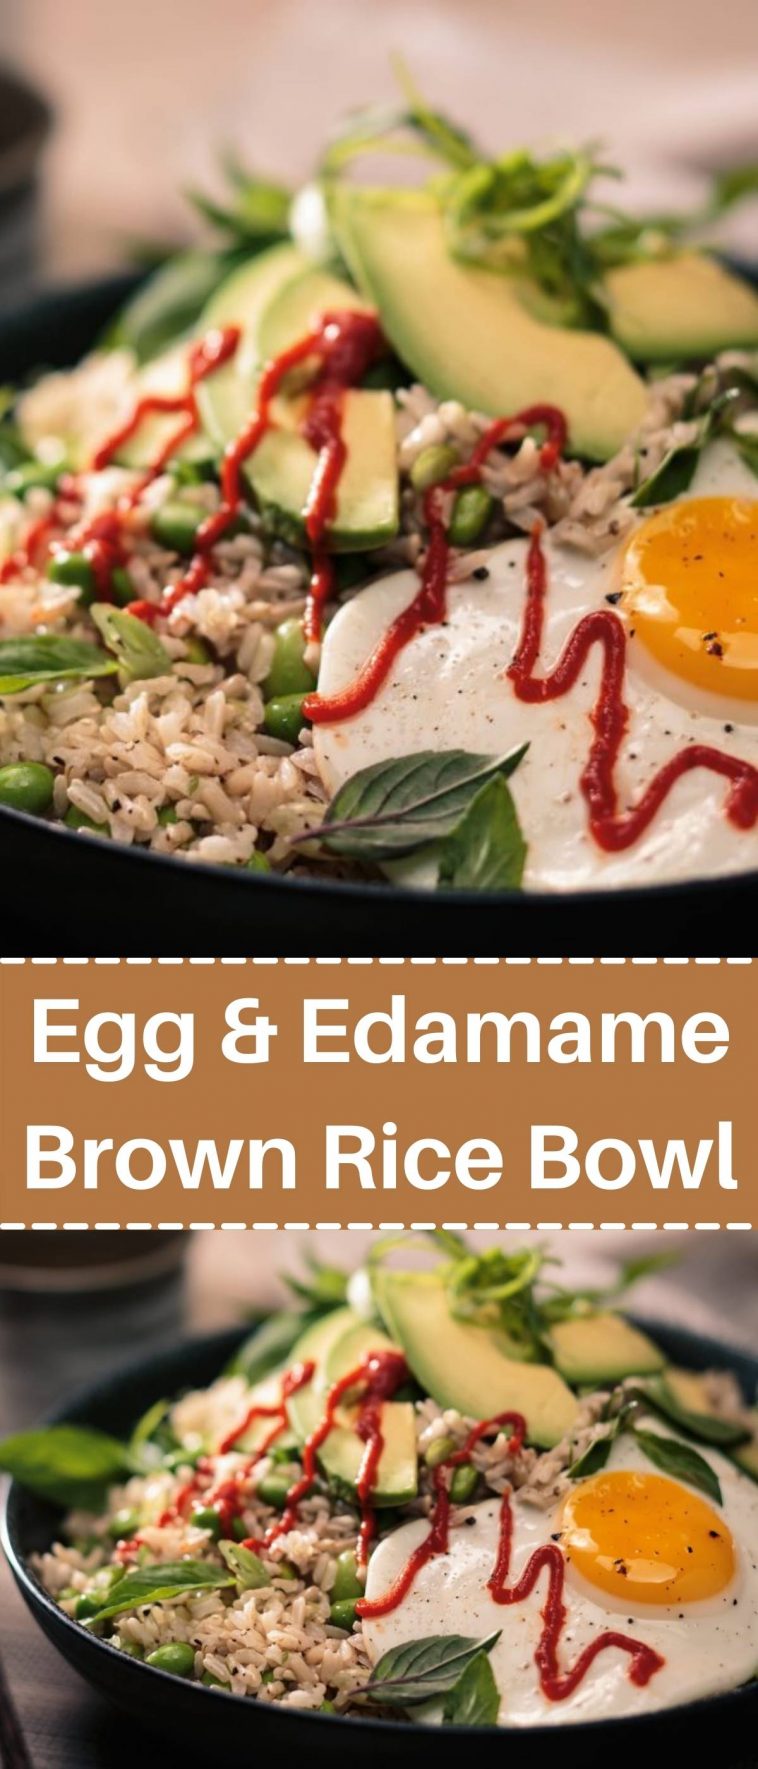 Egg & Edamame Brown Rice Bowl